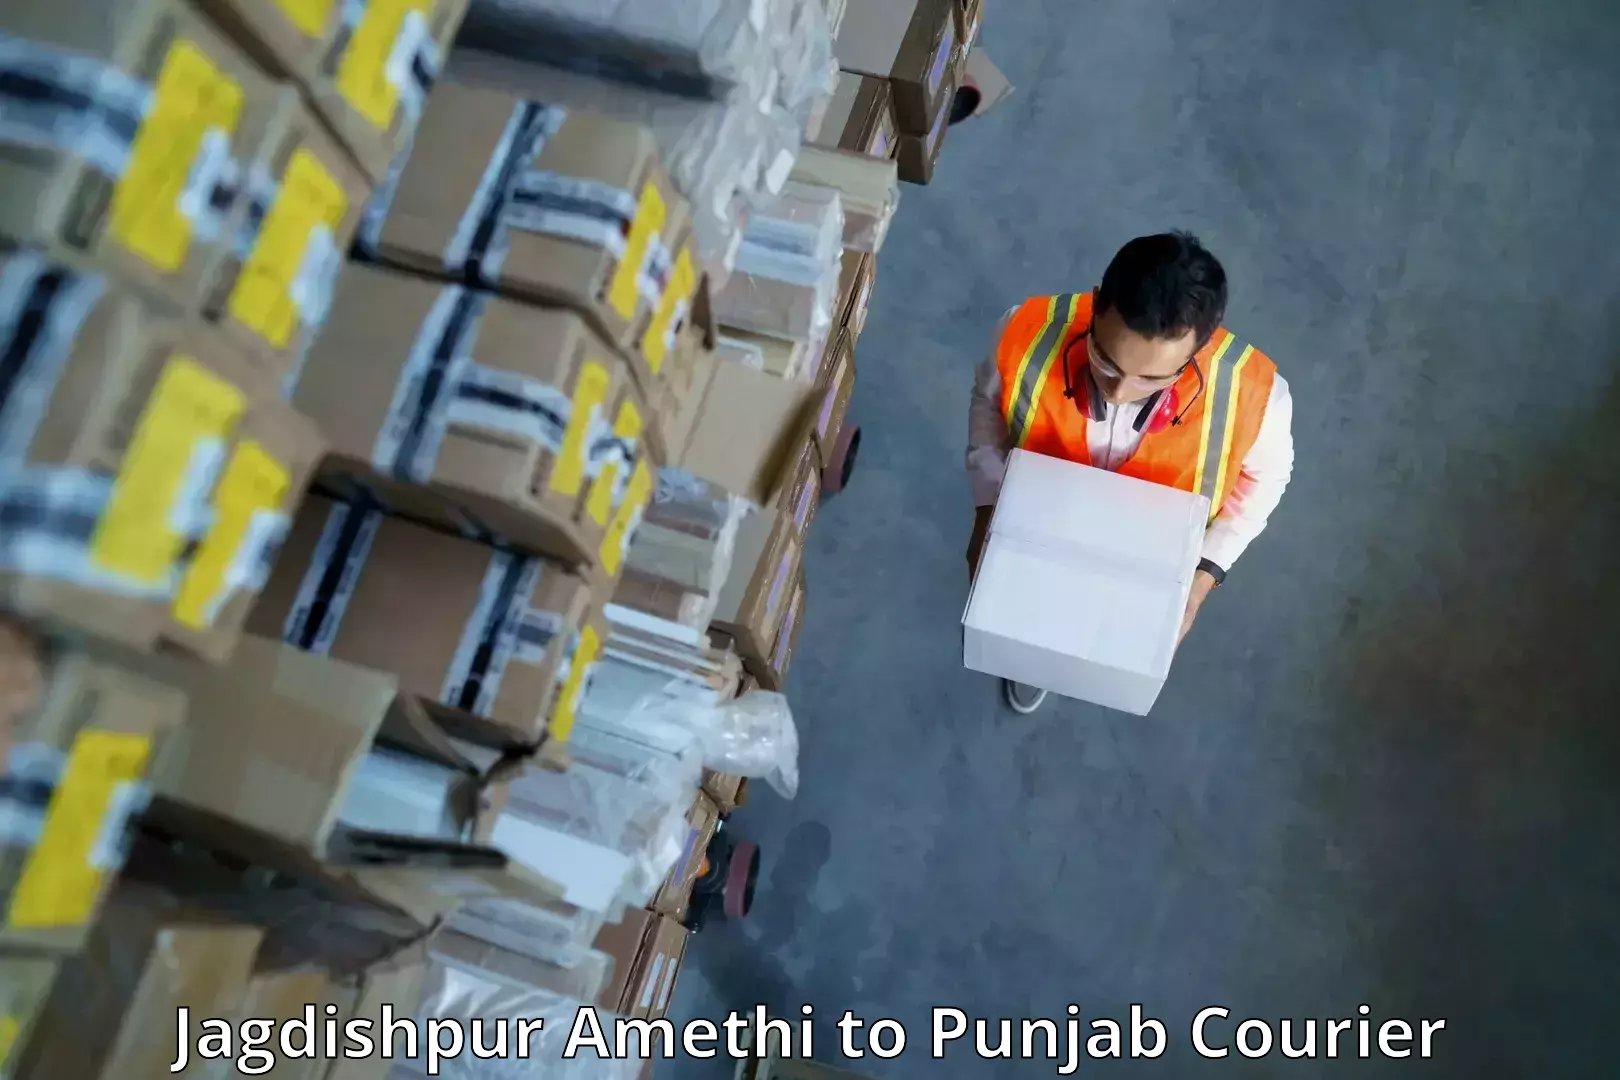 High-performance logistics Jagdishpur Amethi to Patiala